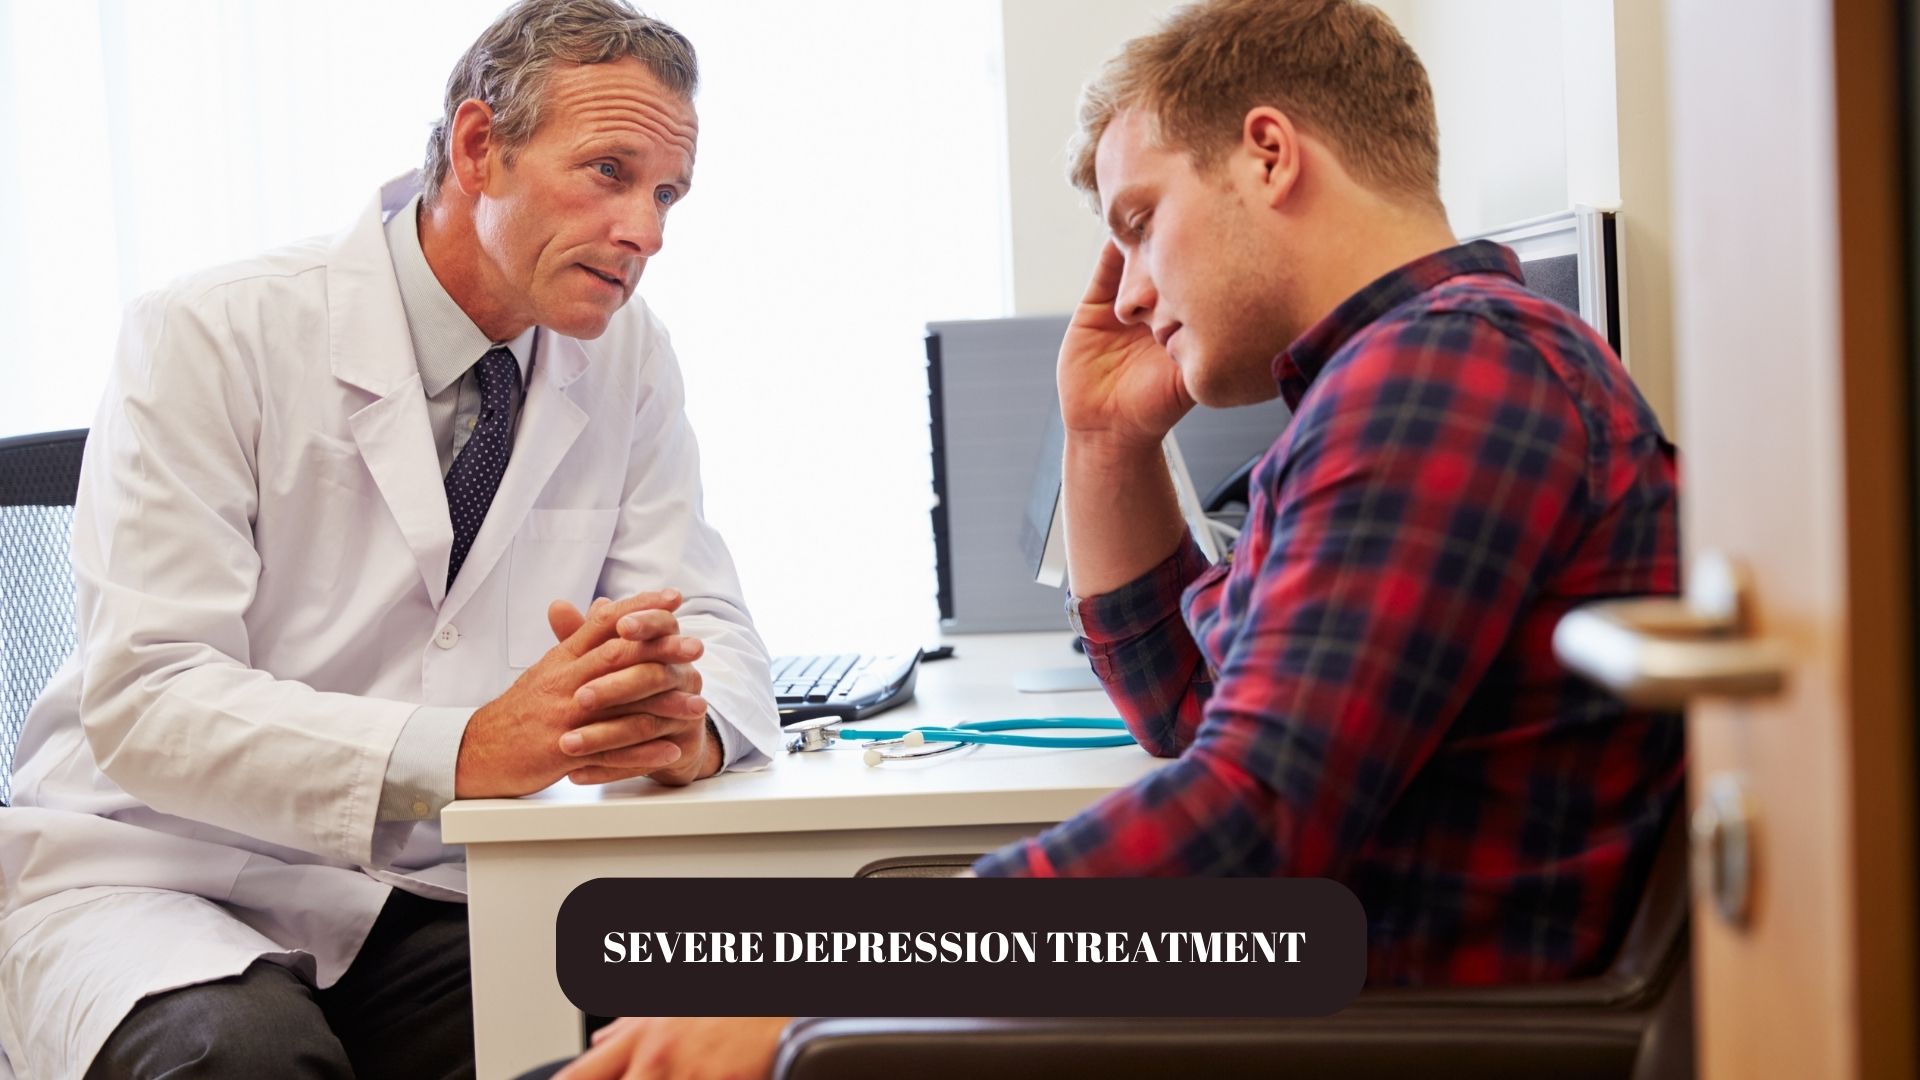 SEVERE DEPRESSION TREATMENT